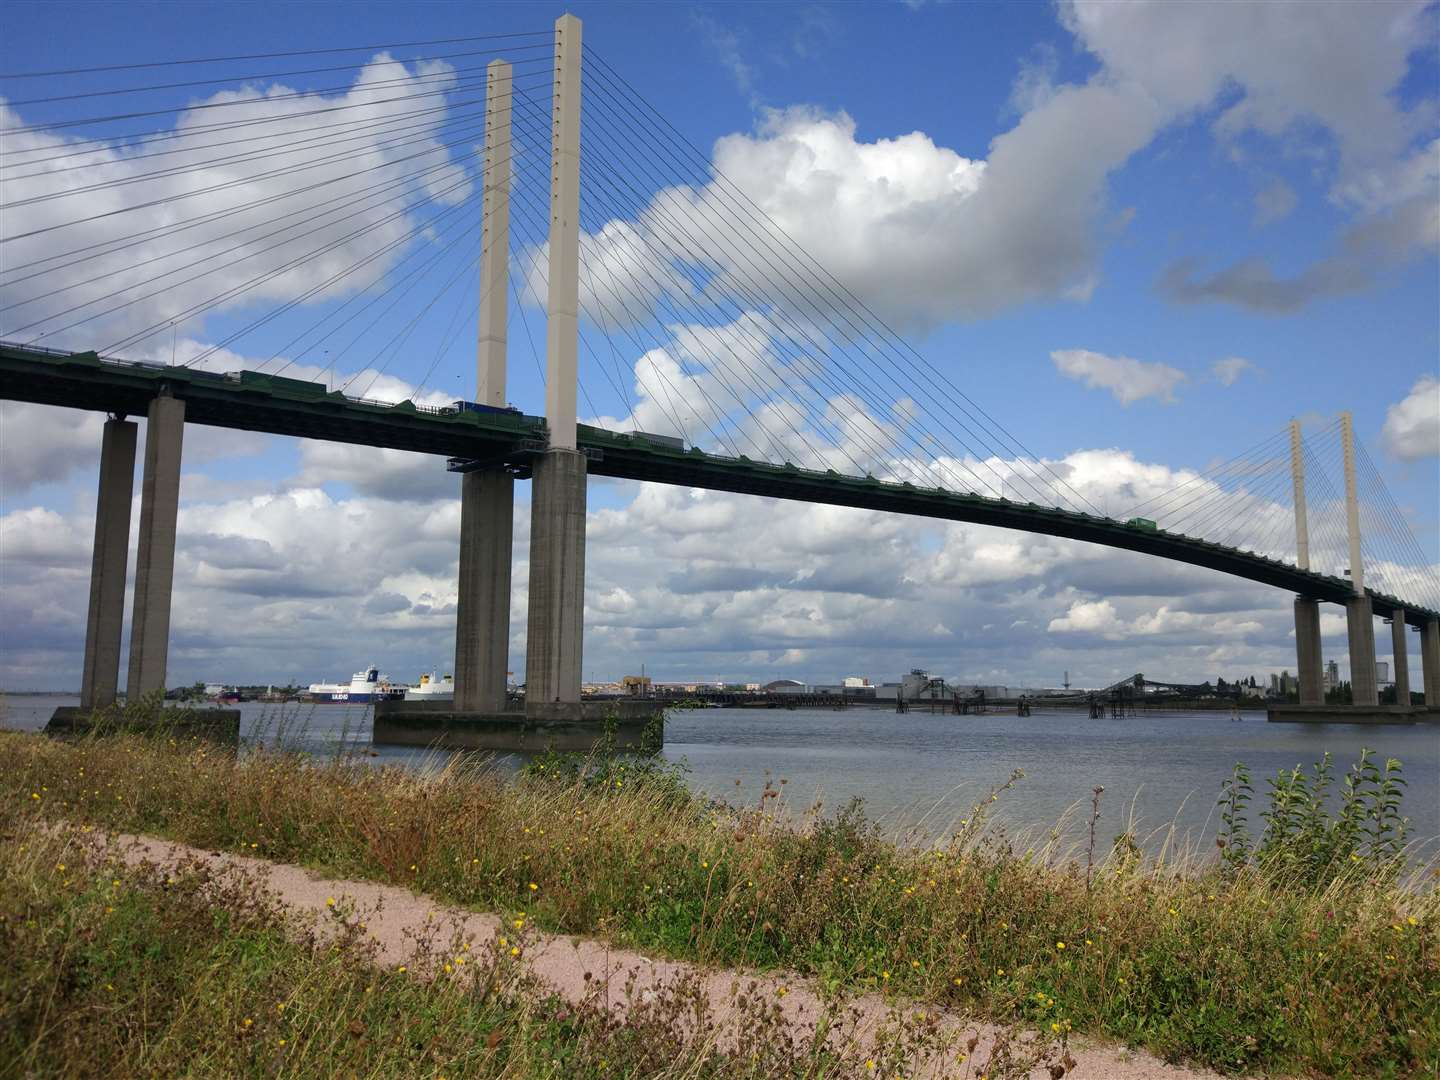 The QEII Bridge from the coastal path